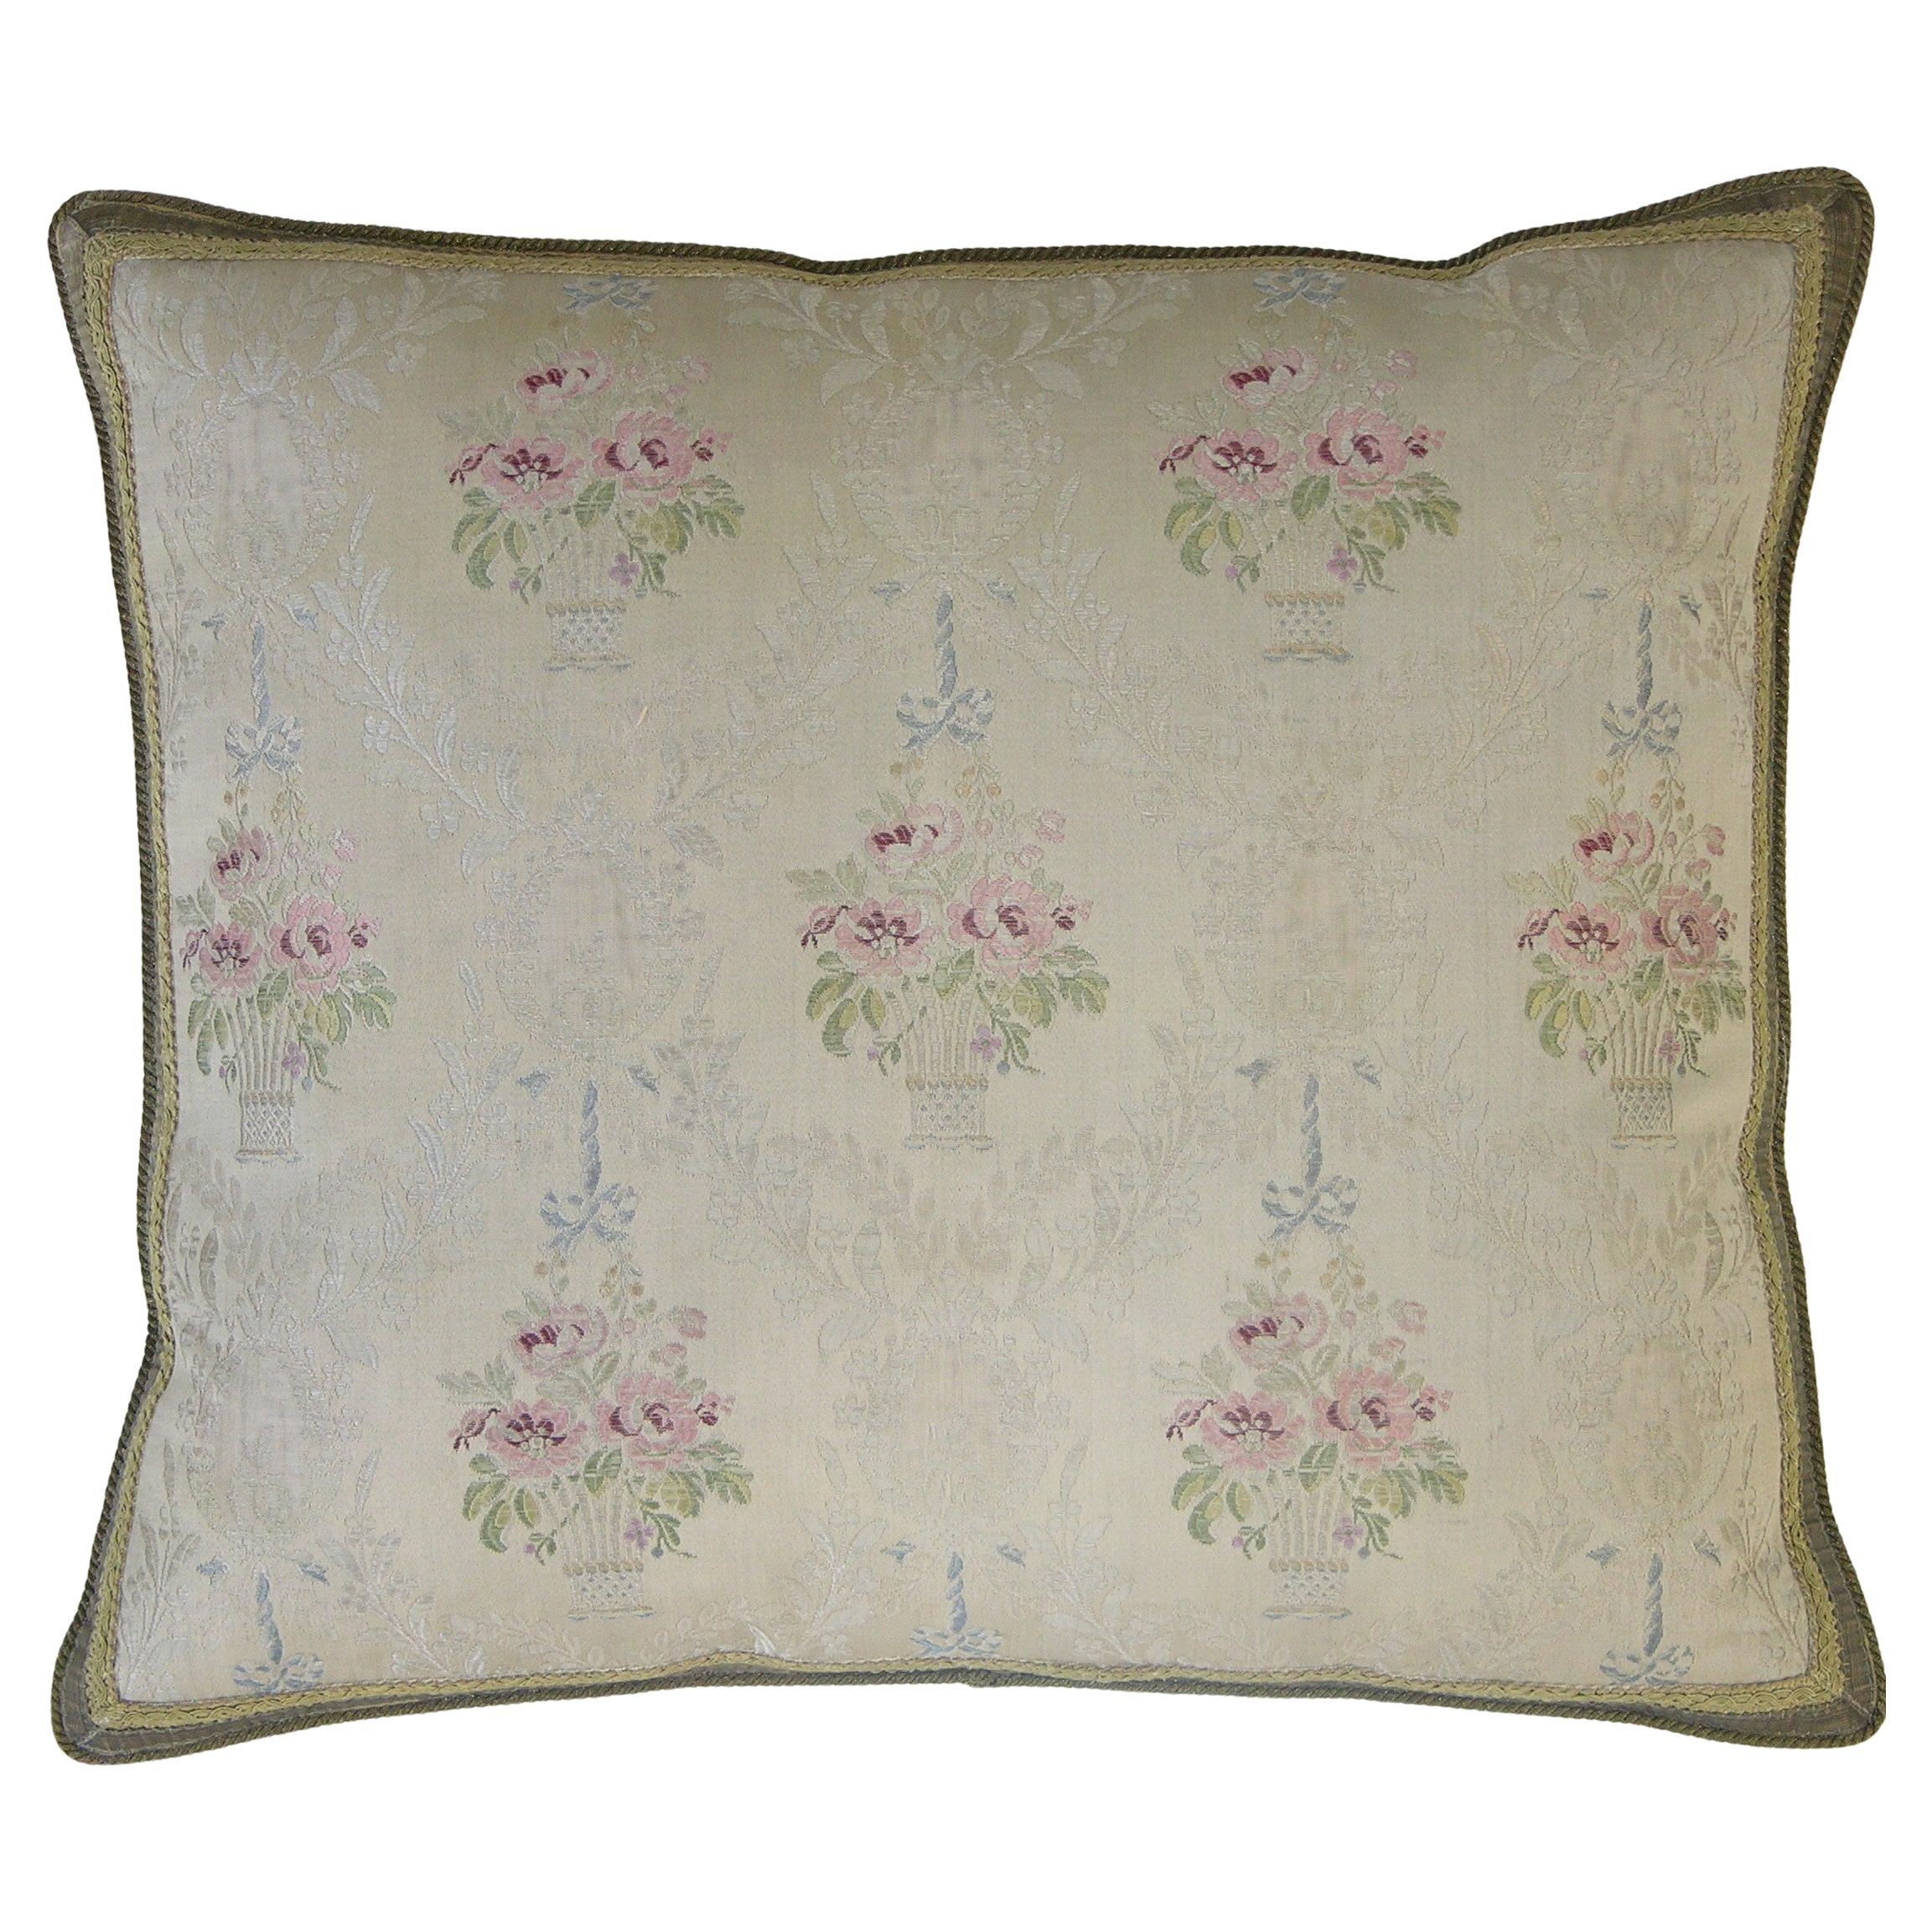 Circa 1860 Antique French Textile Pillow For Sale